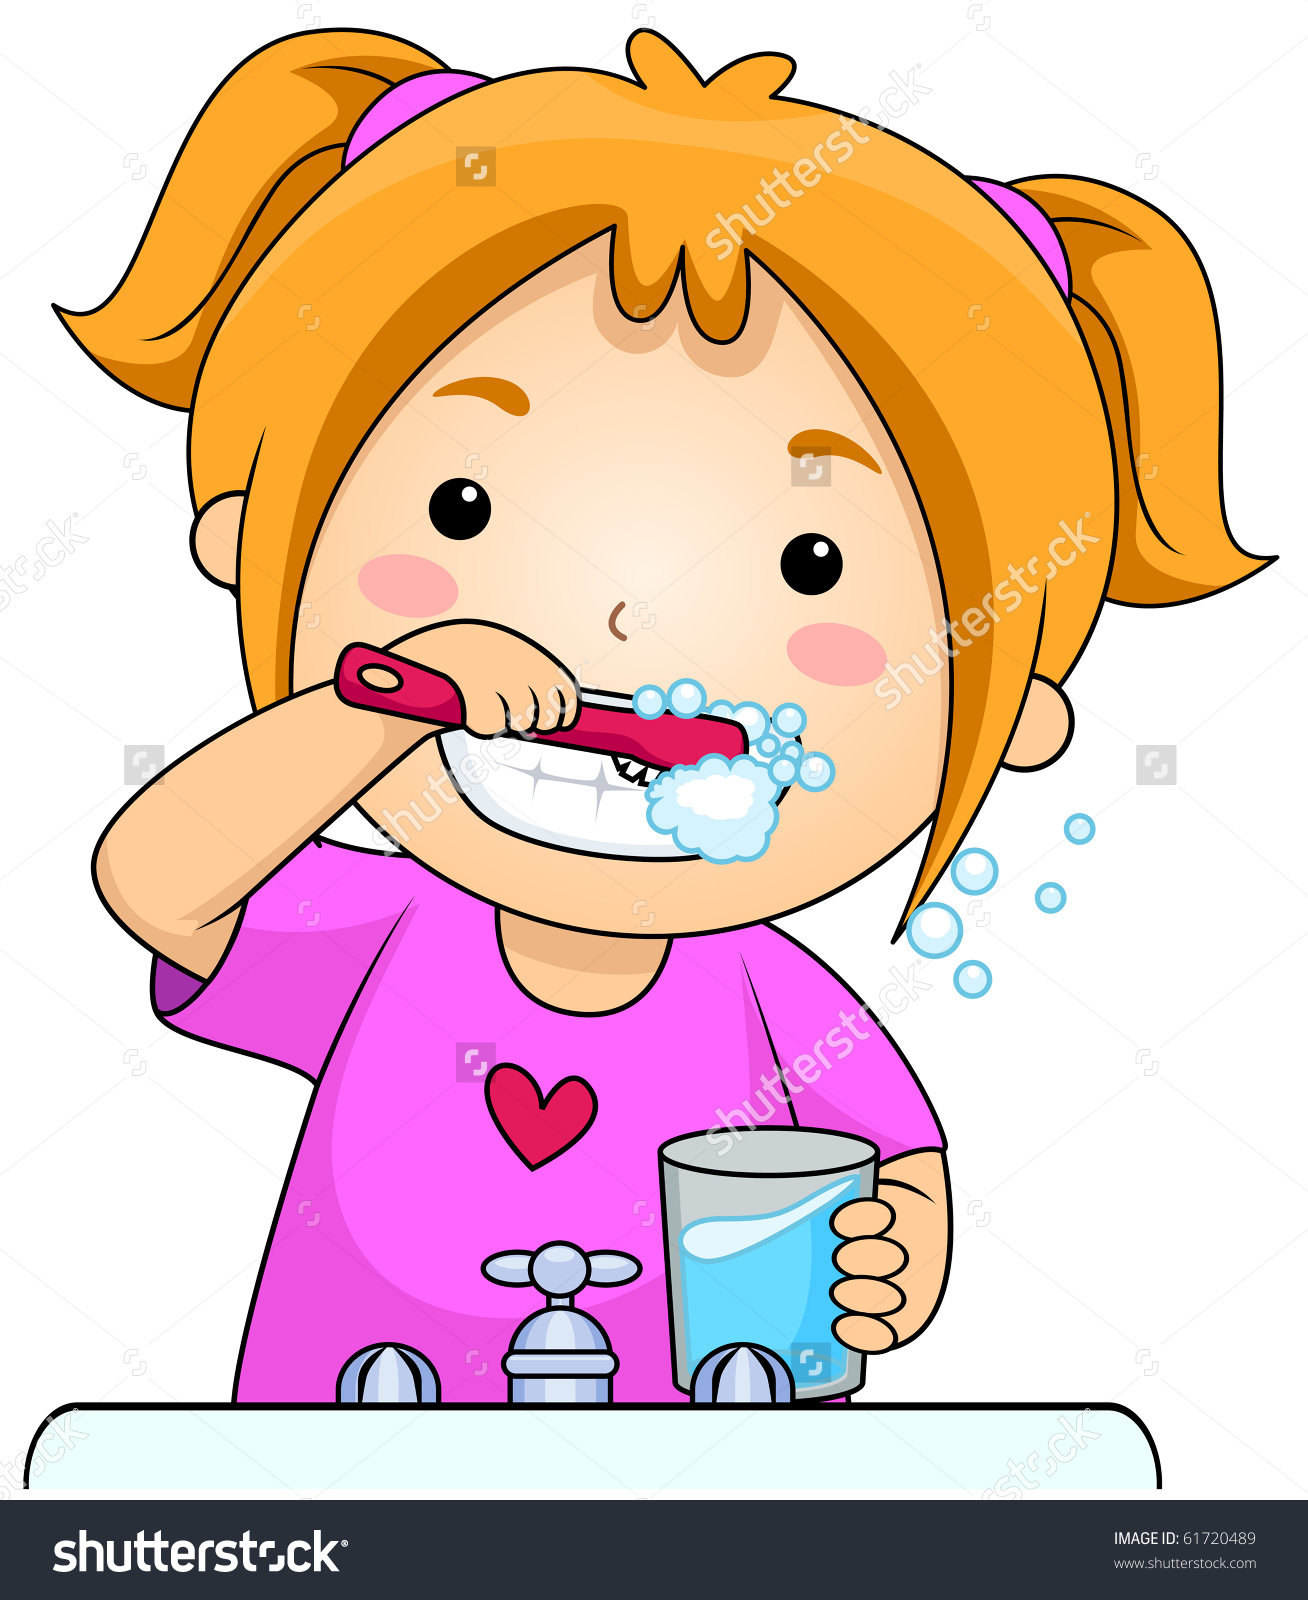 Dental Girl Brushing Teeth 1030 Classroom Clipart. Save to a lightbox